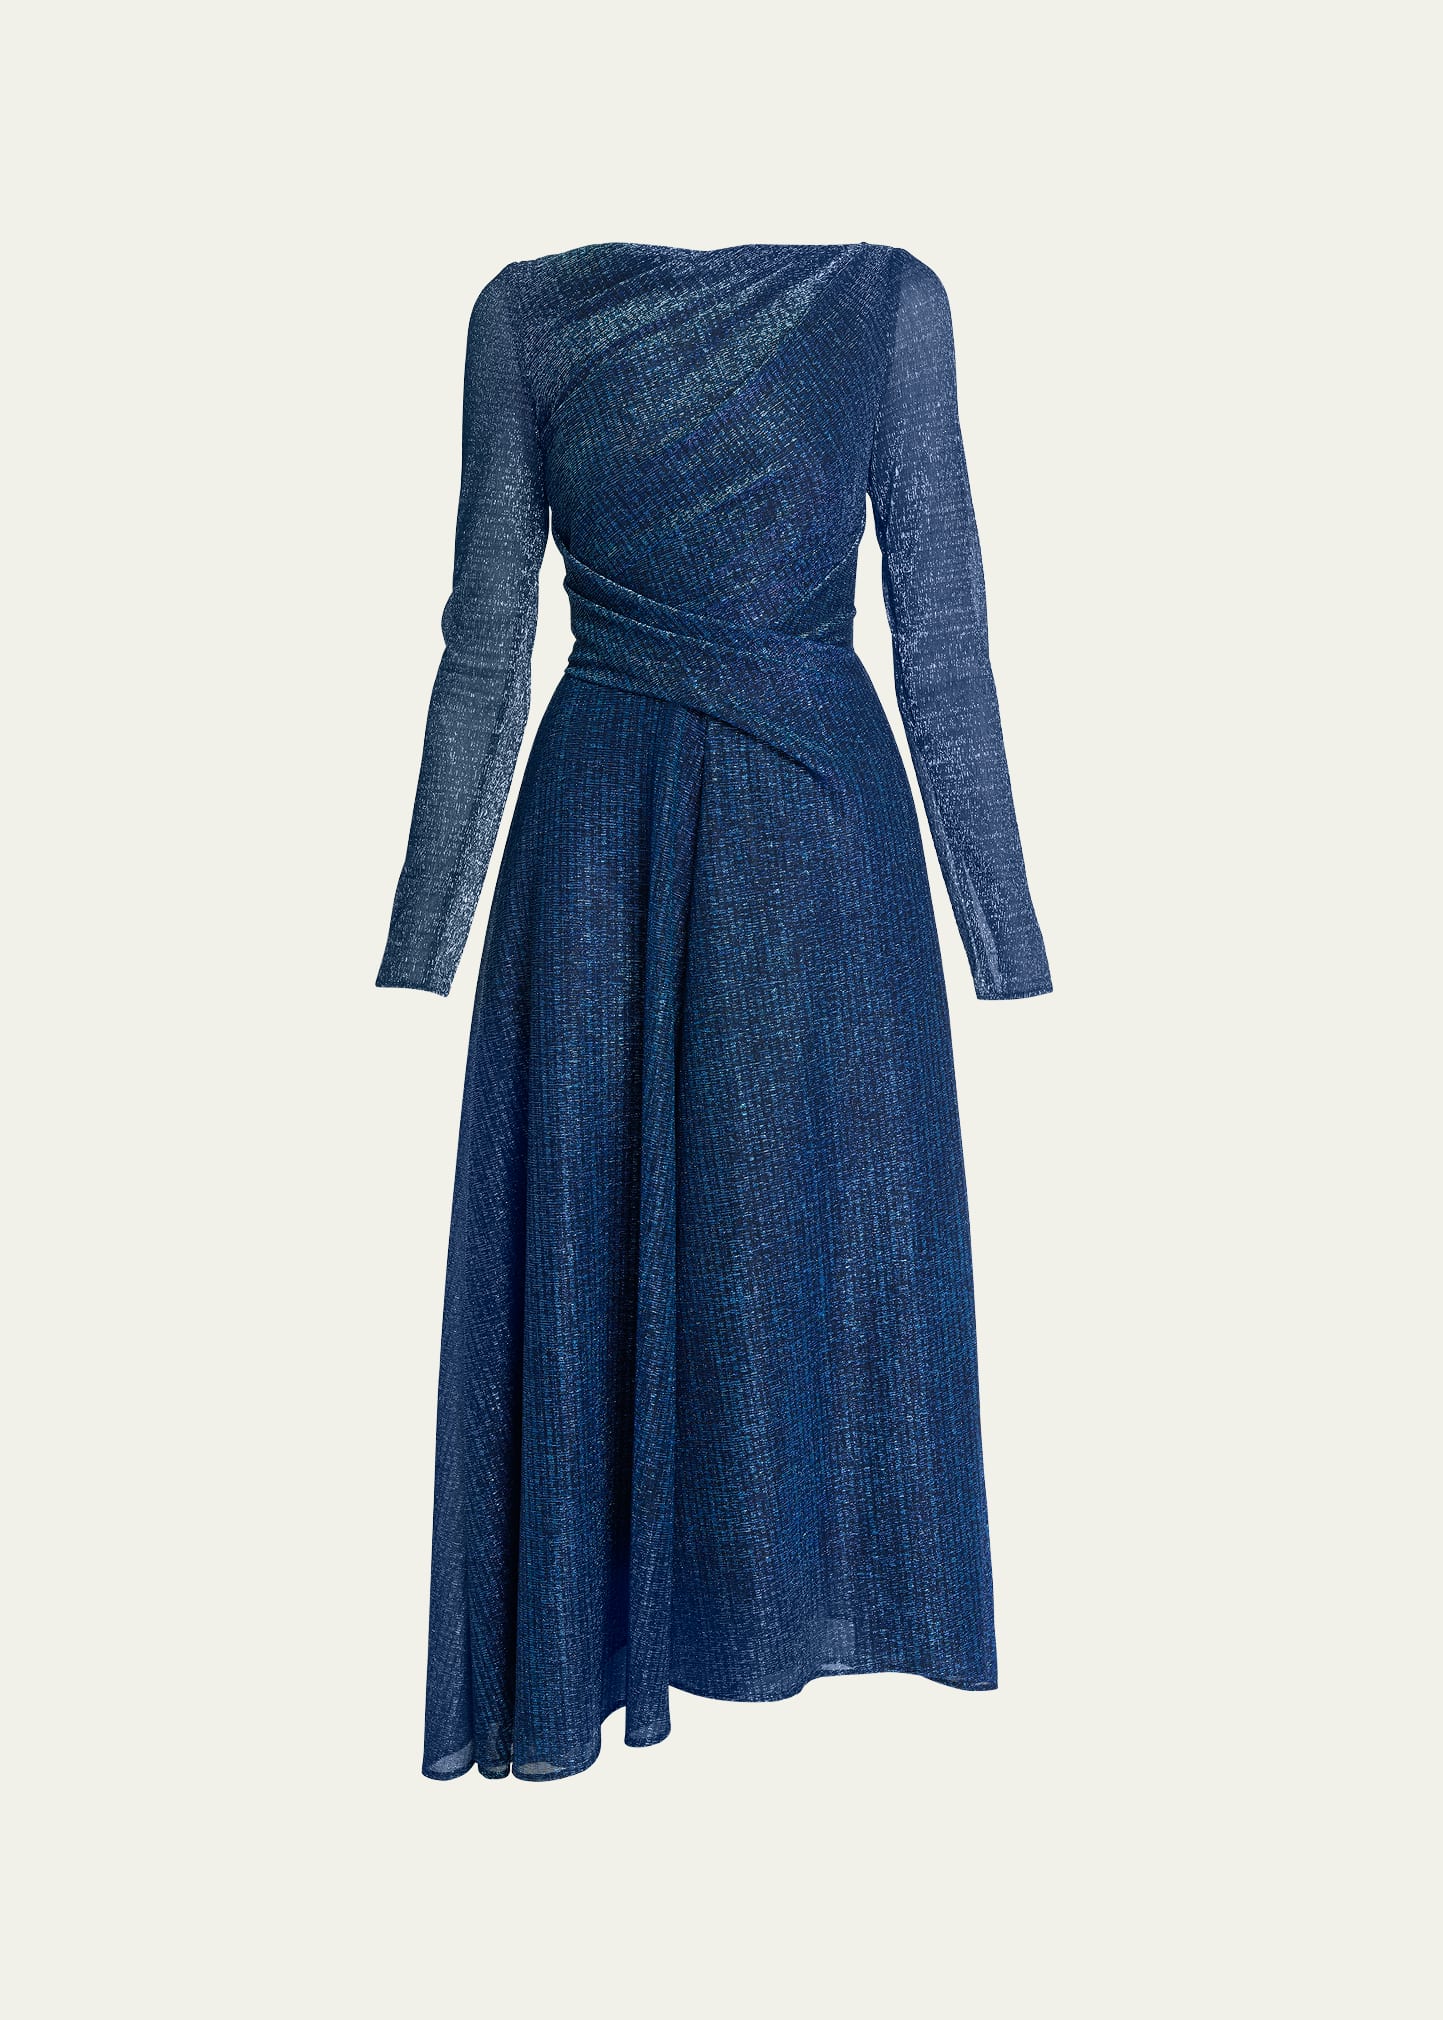 Talbot Runhof Metallic Fit-flare Asymmetric Dress In Turquoise